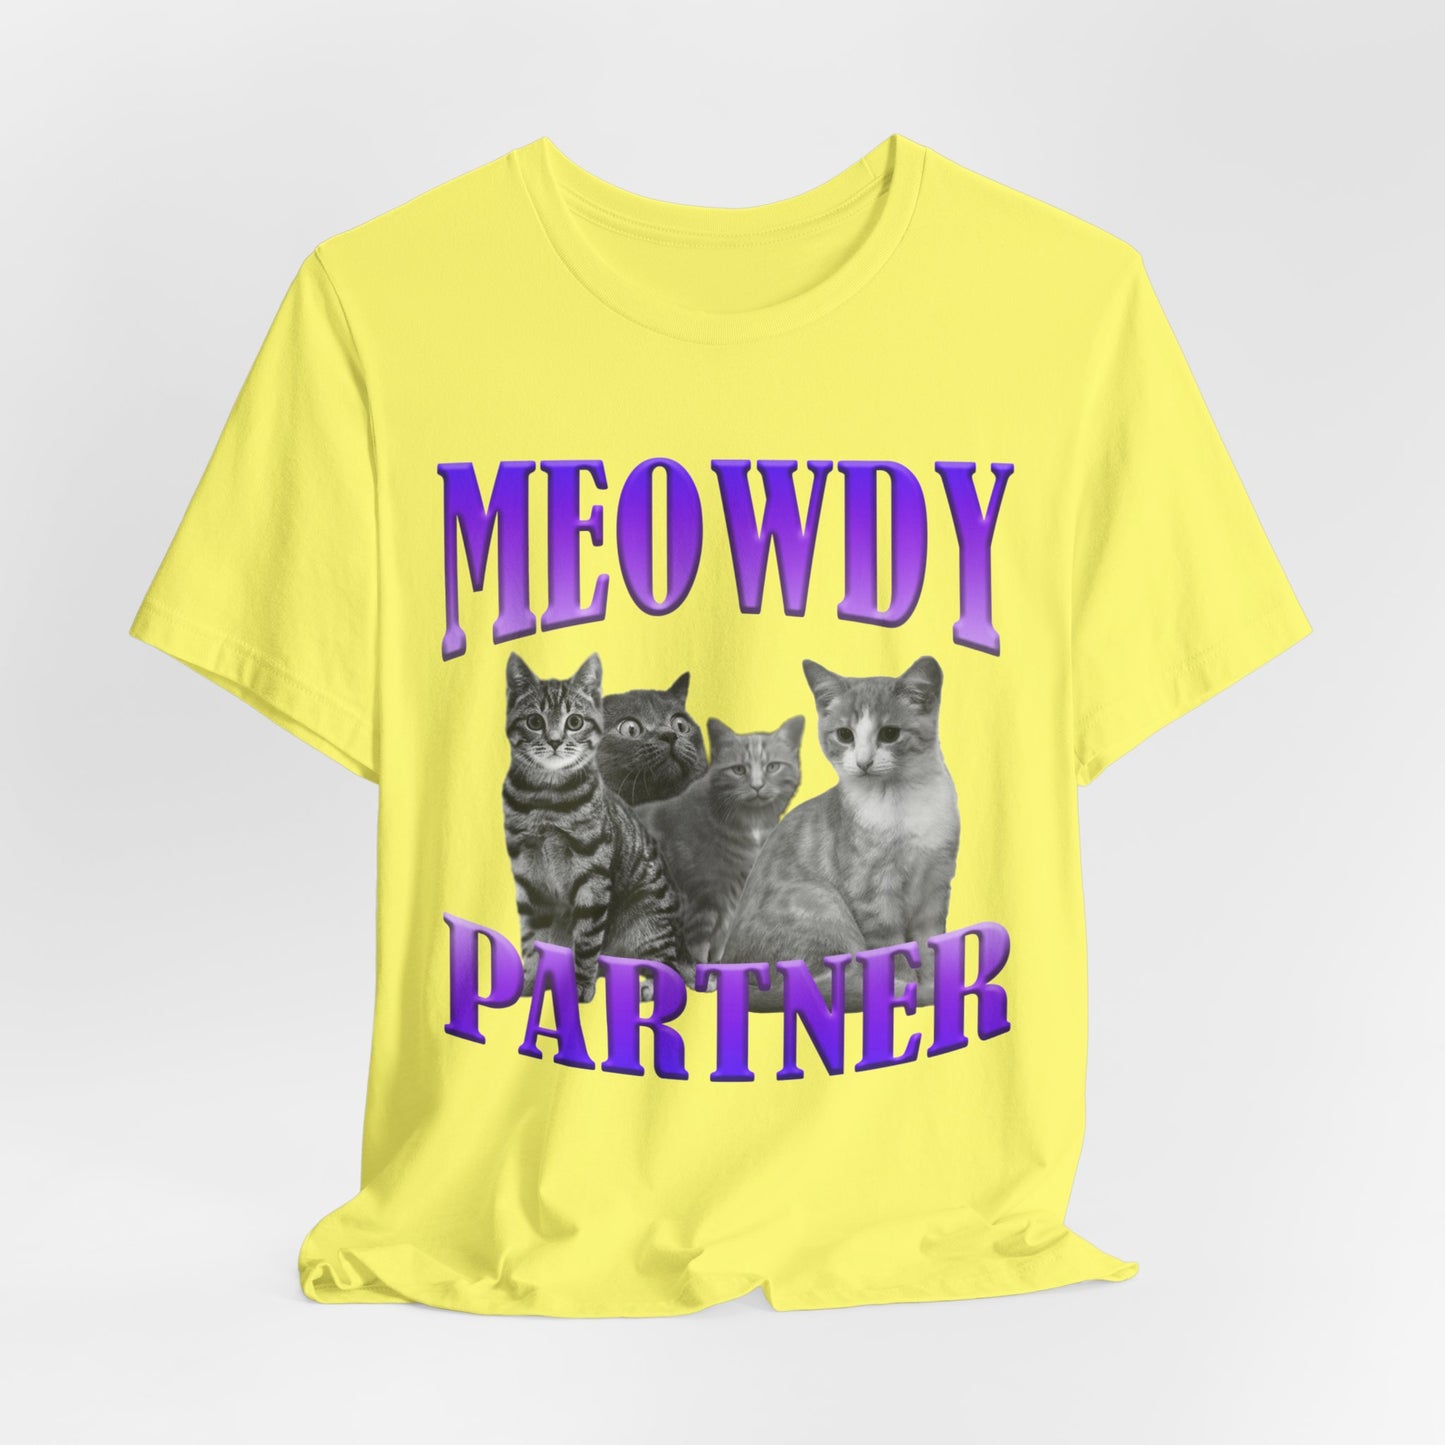 Meowdy Partner Tee